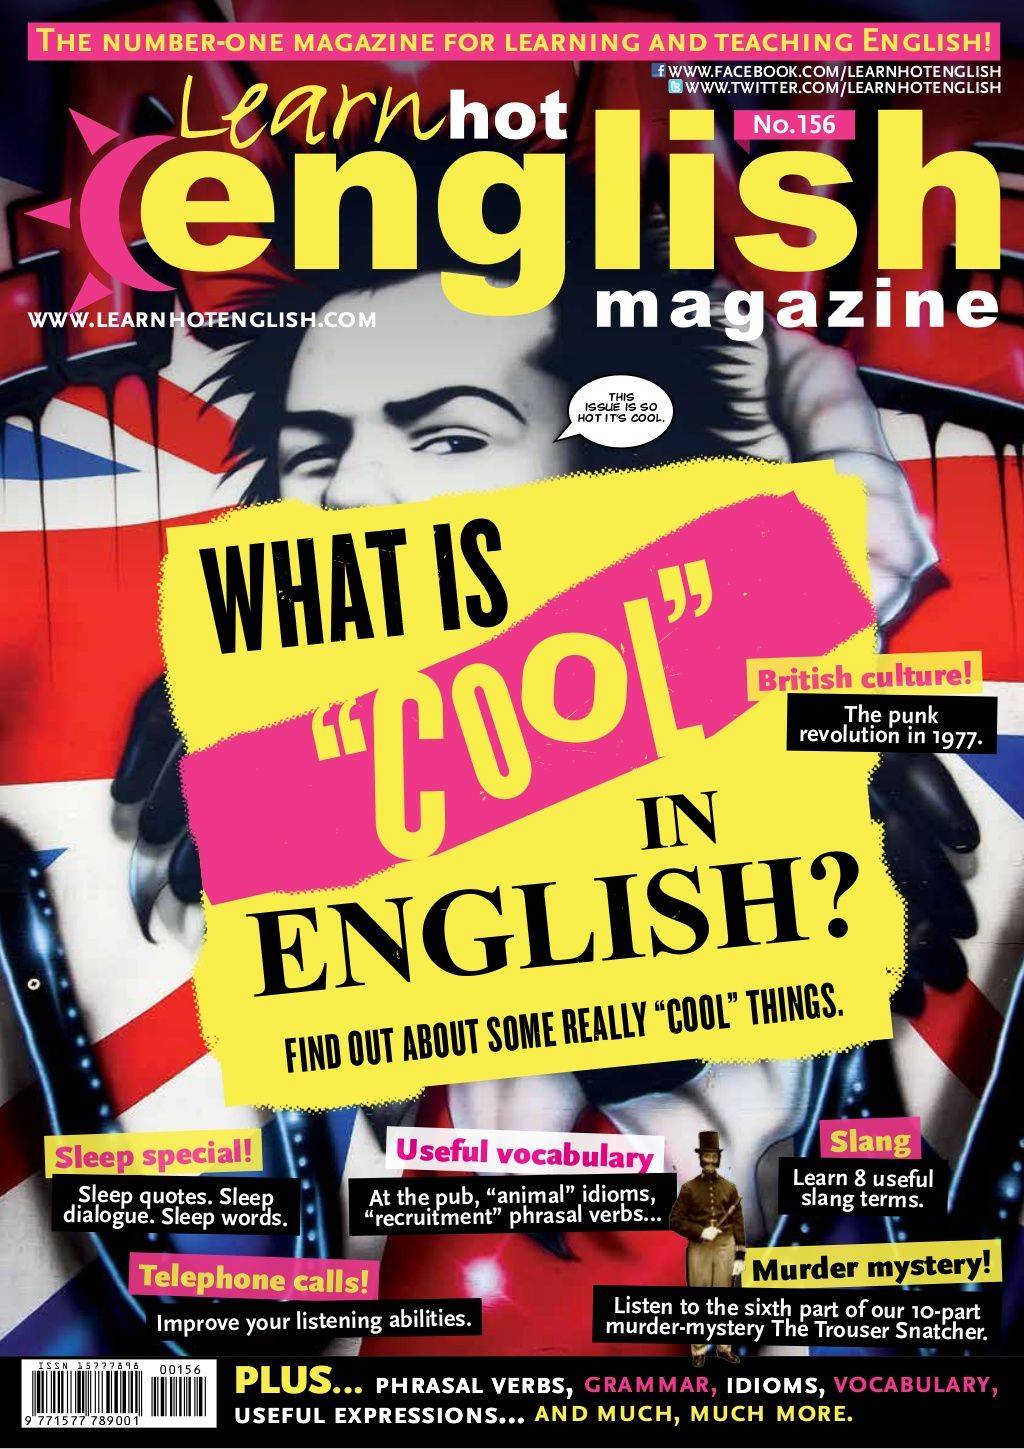 Magazine английский. Английские журналы. Журнал English. Английские журналы на английском. Популярный английский журнал.